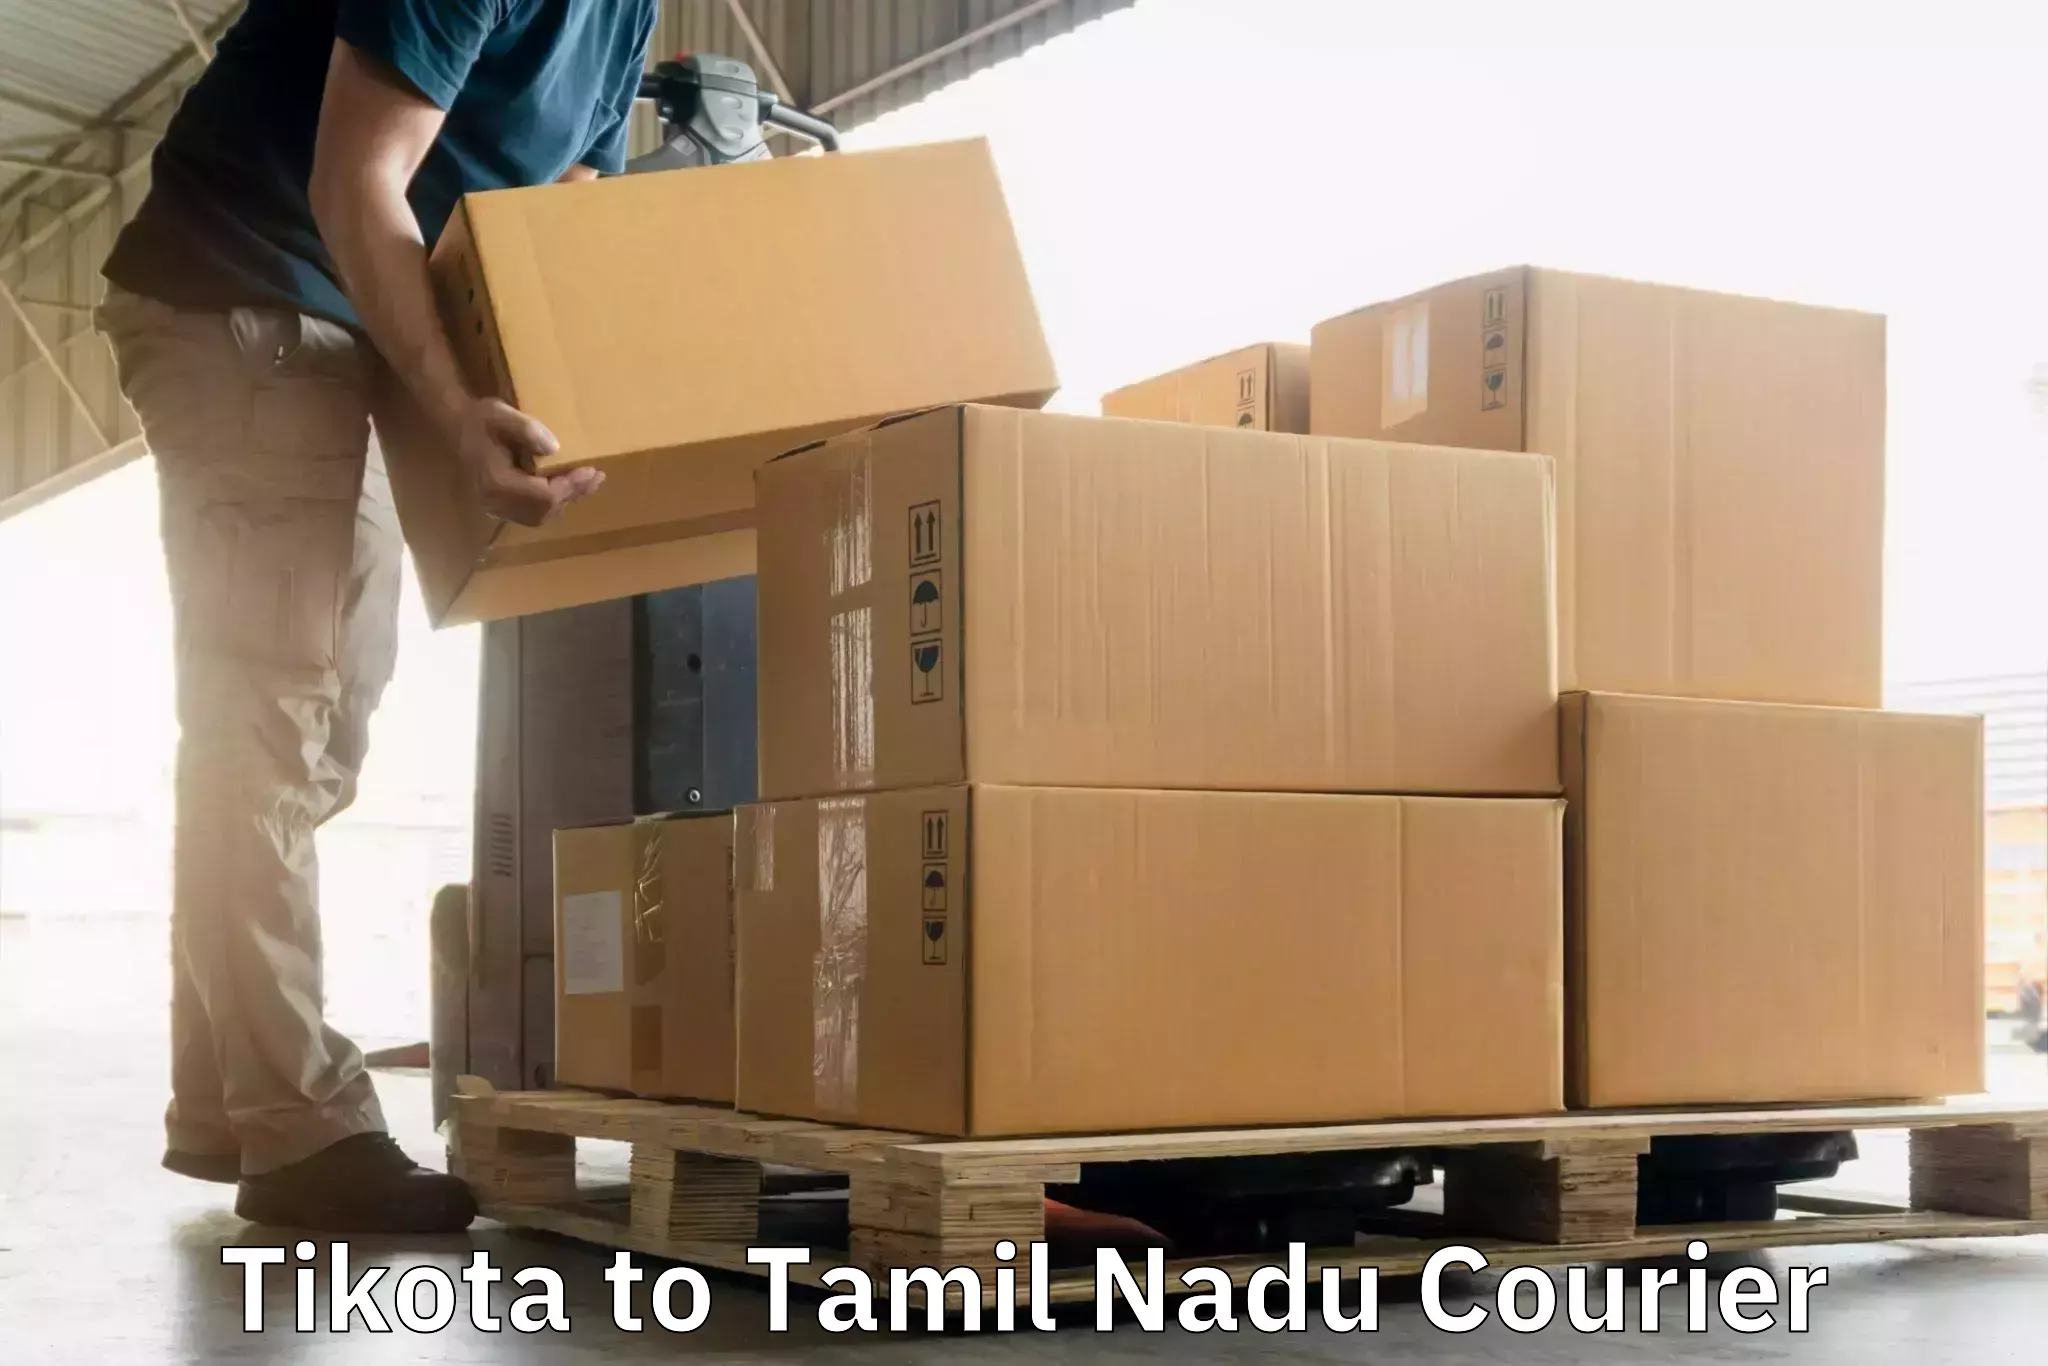 Advanced tracking systems Tikota to Tamil Nadu